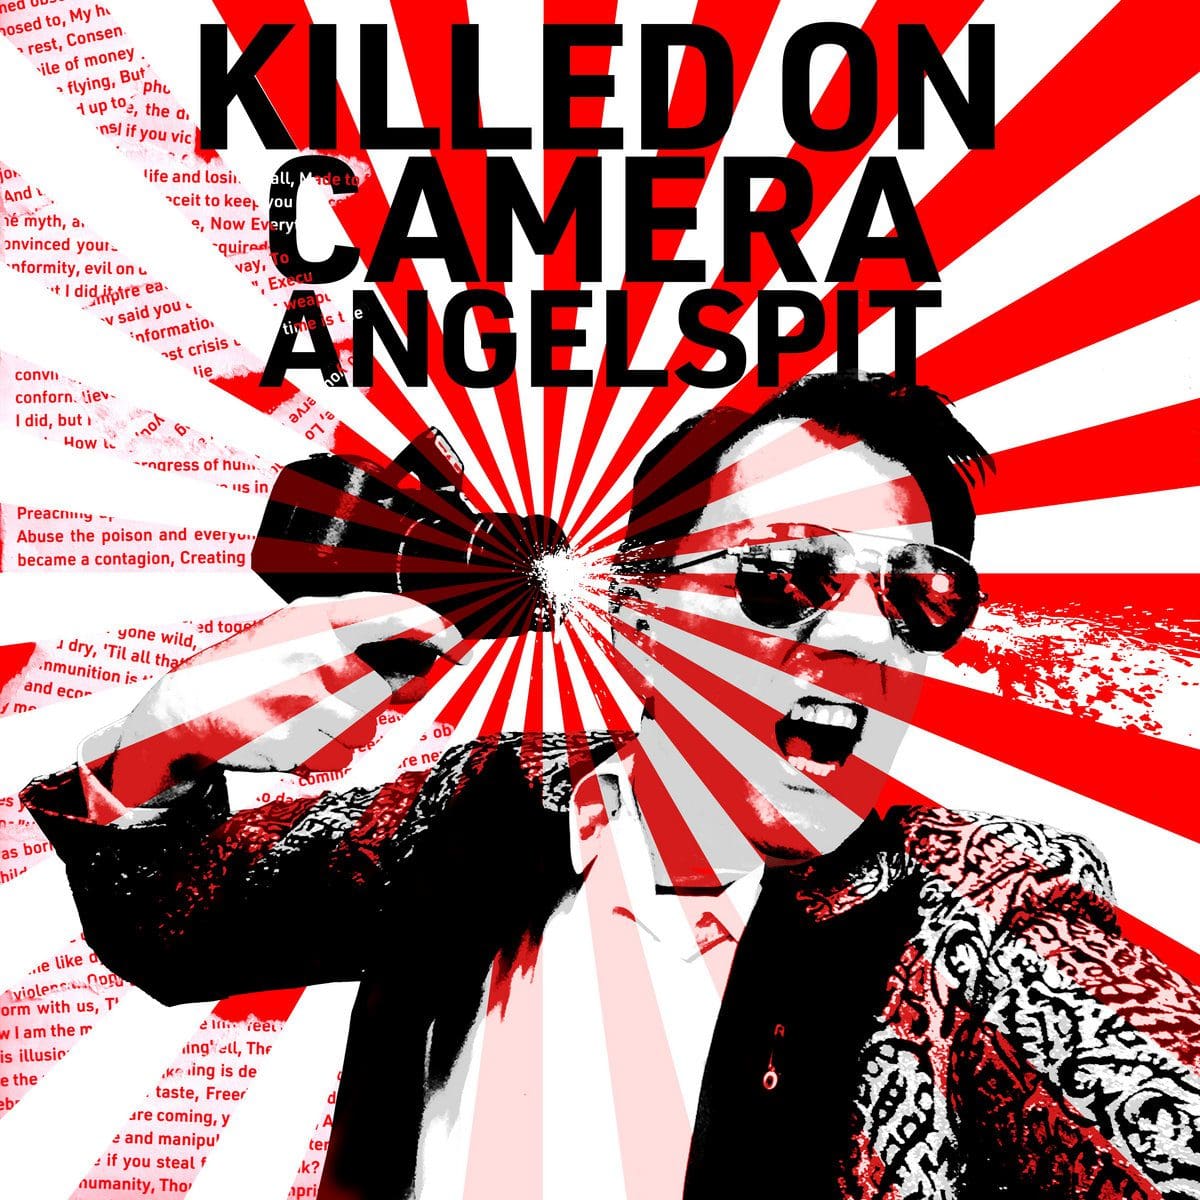 Angelspit lands new single, 'Killed on Camera'